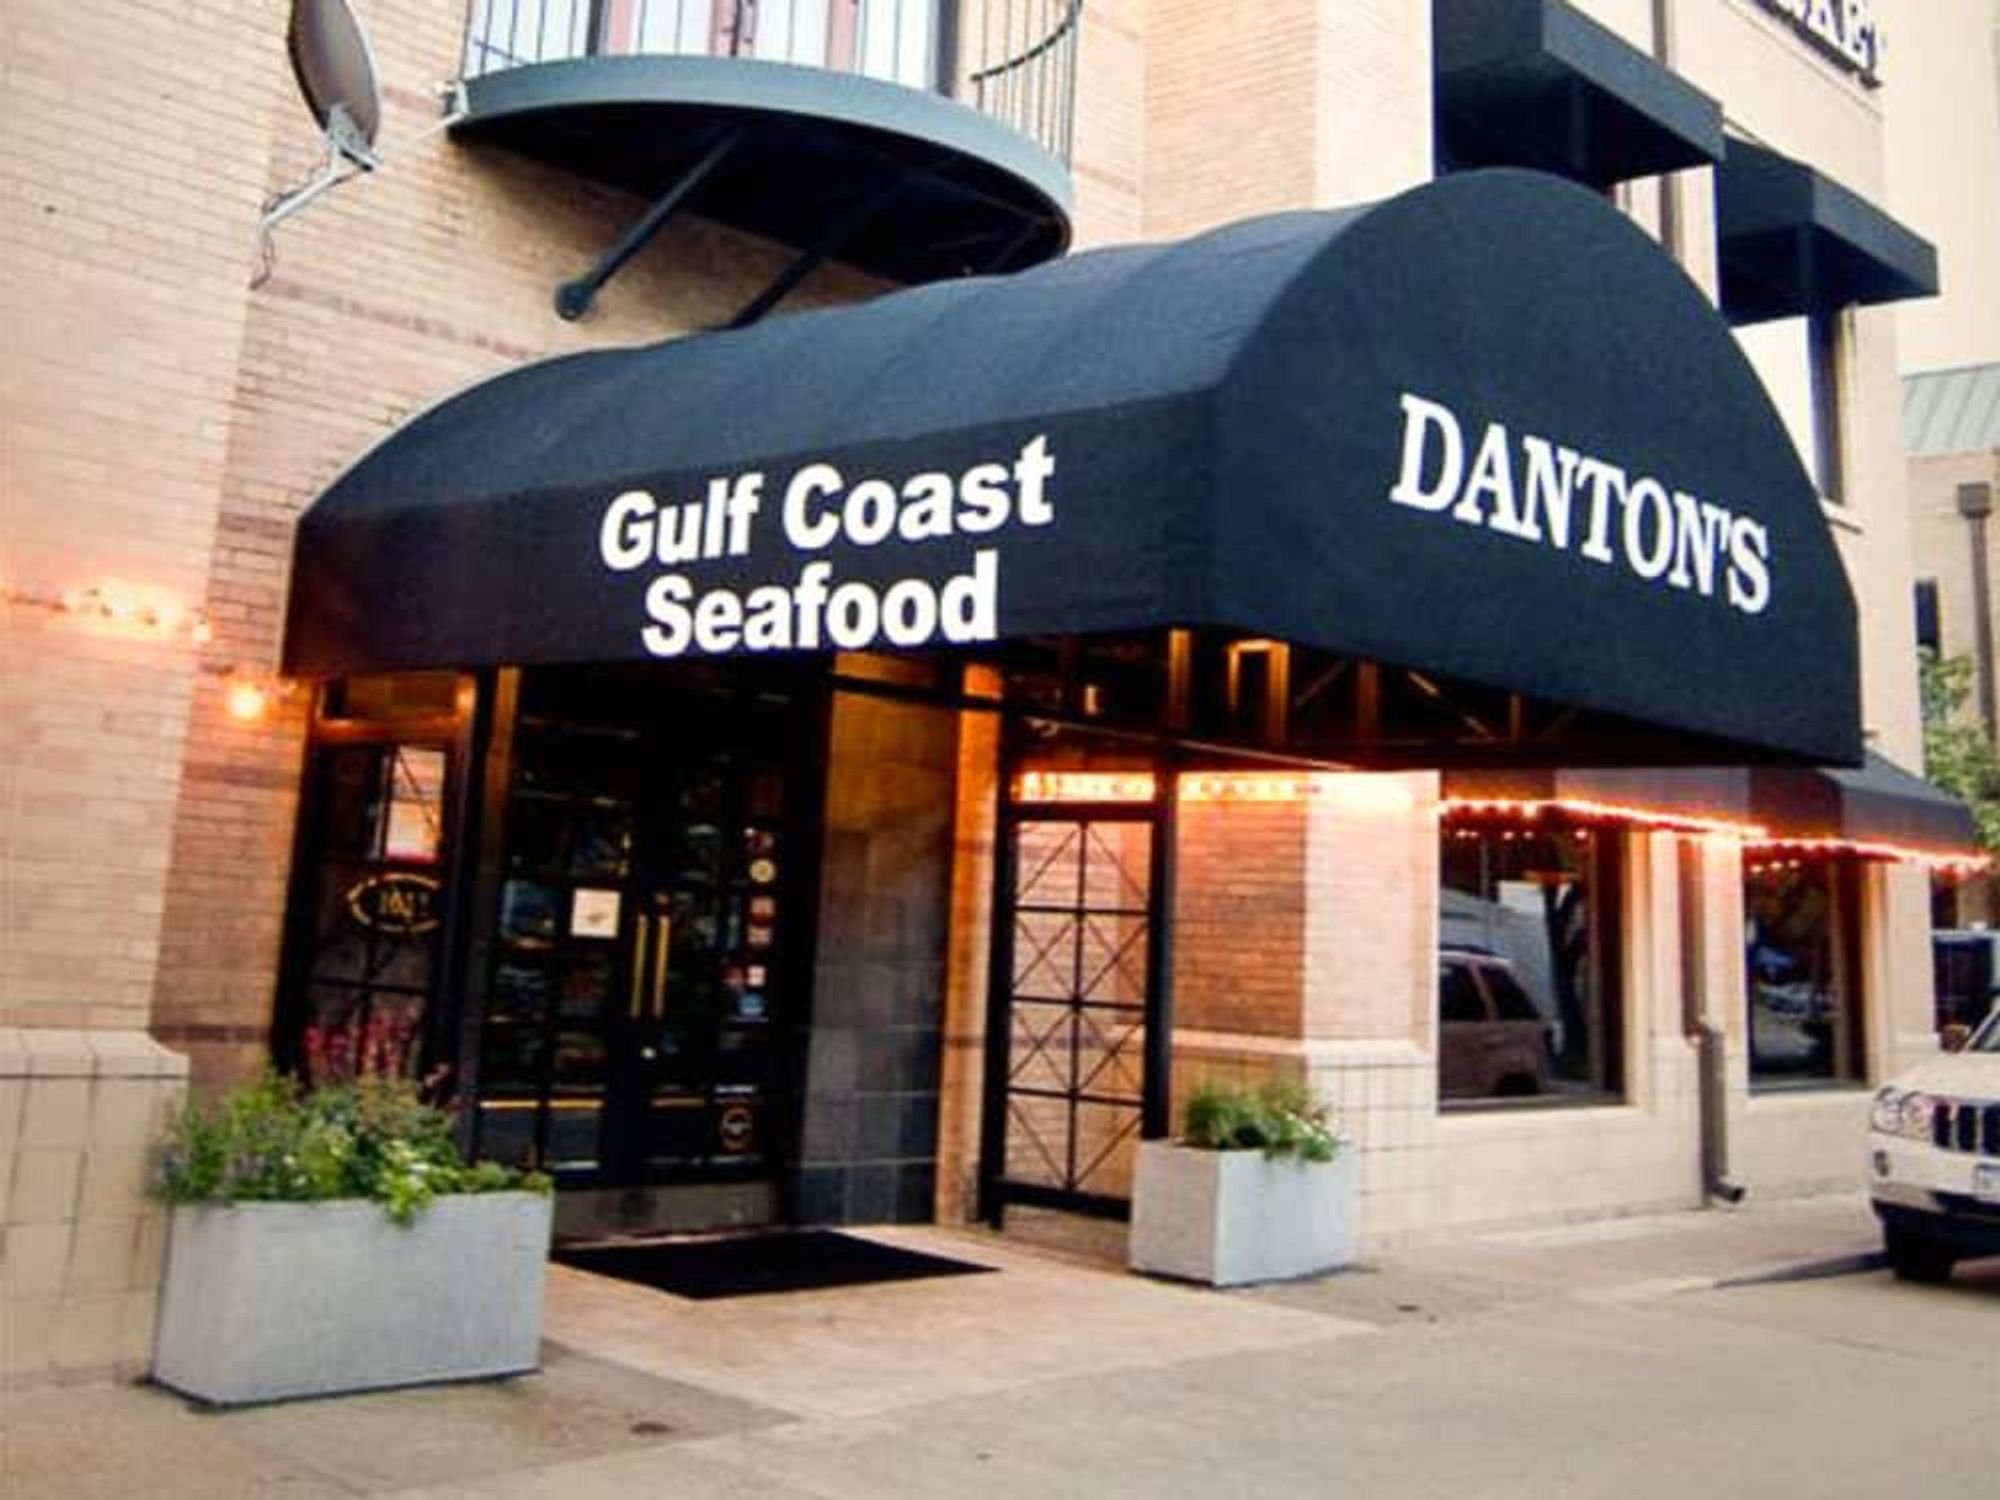 News_restaurant_Danton's Gulf Coast Seafood